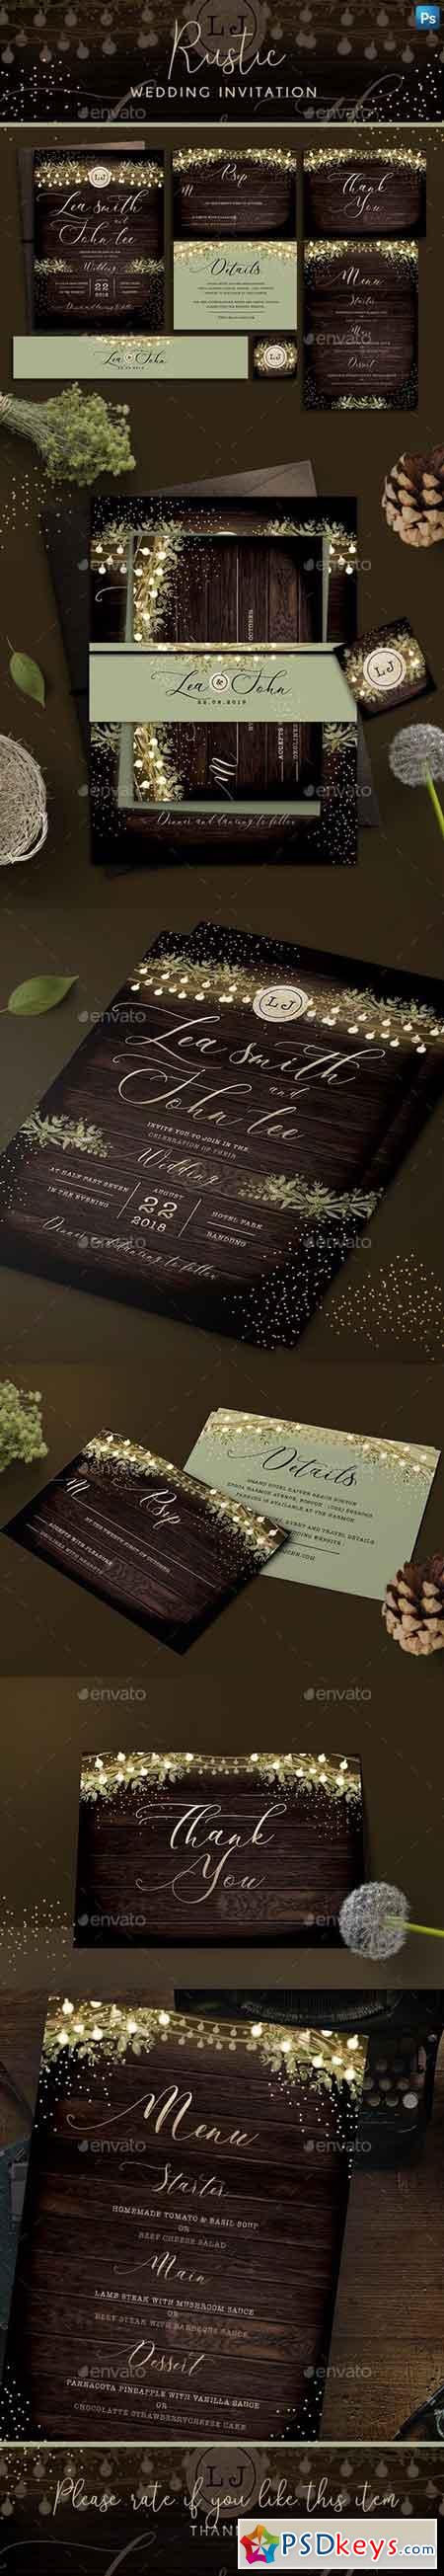 Rustic Wedding Invitation 22084287